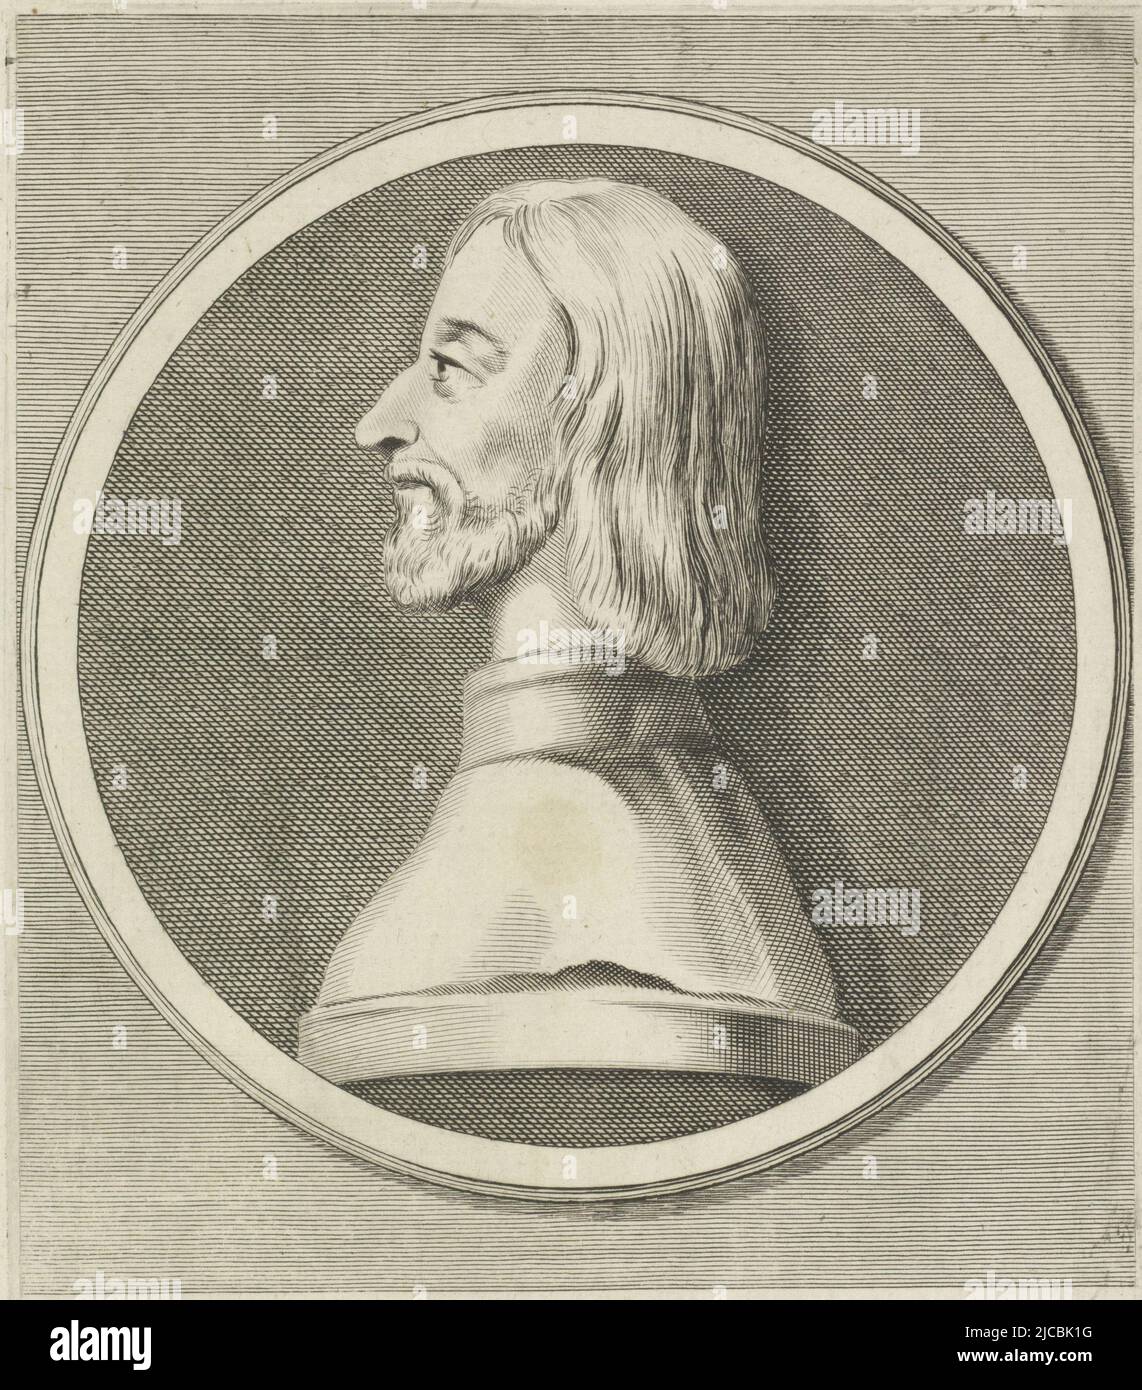 Portrait of Battista Visconti, print maker: Giovanni Battista Bonacina, (mentioned on object), Italy, 1625 - 1669, paper, etching, engraving, h 220 mm × w 160 mm Stock Photo